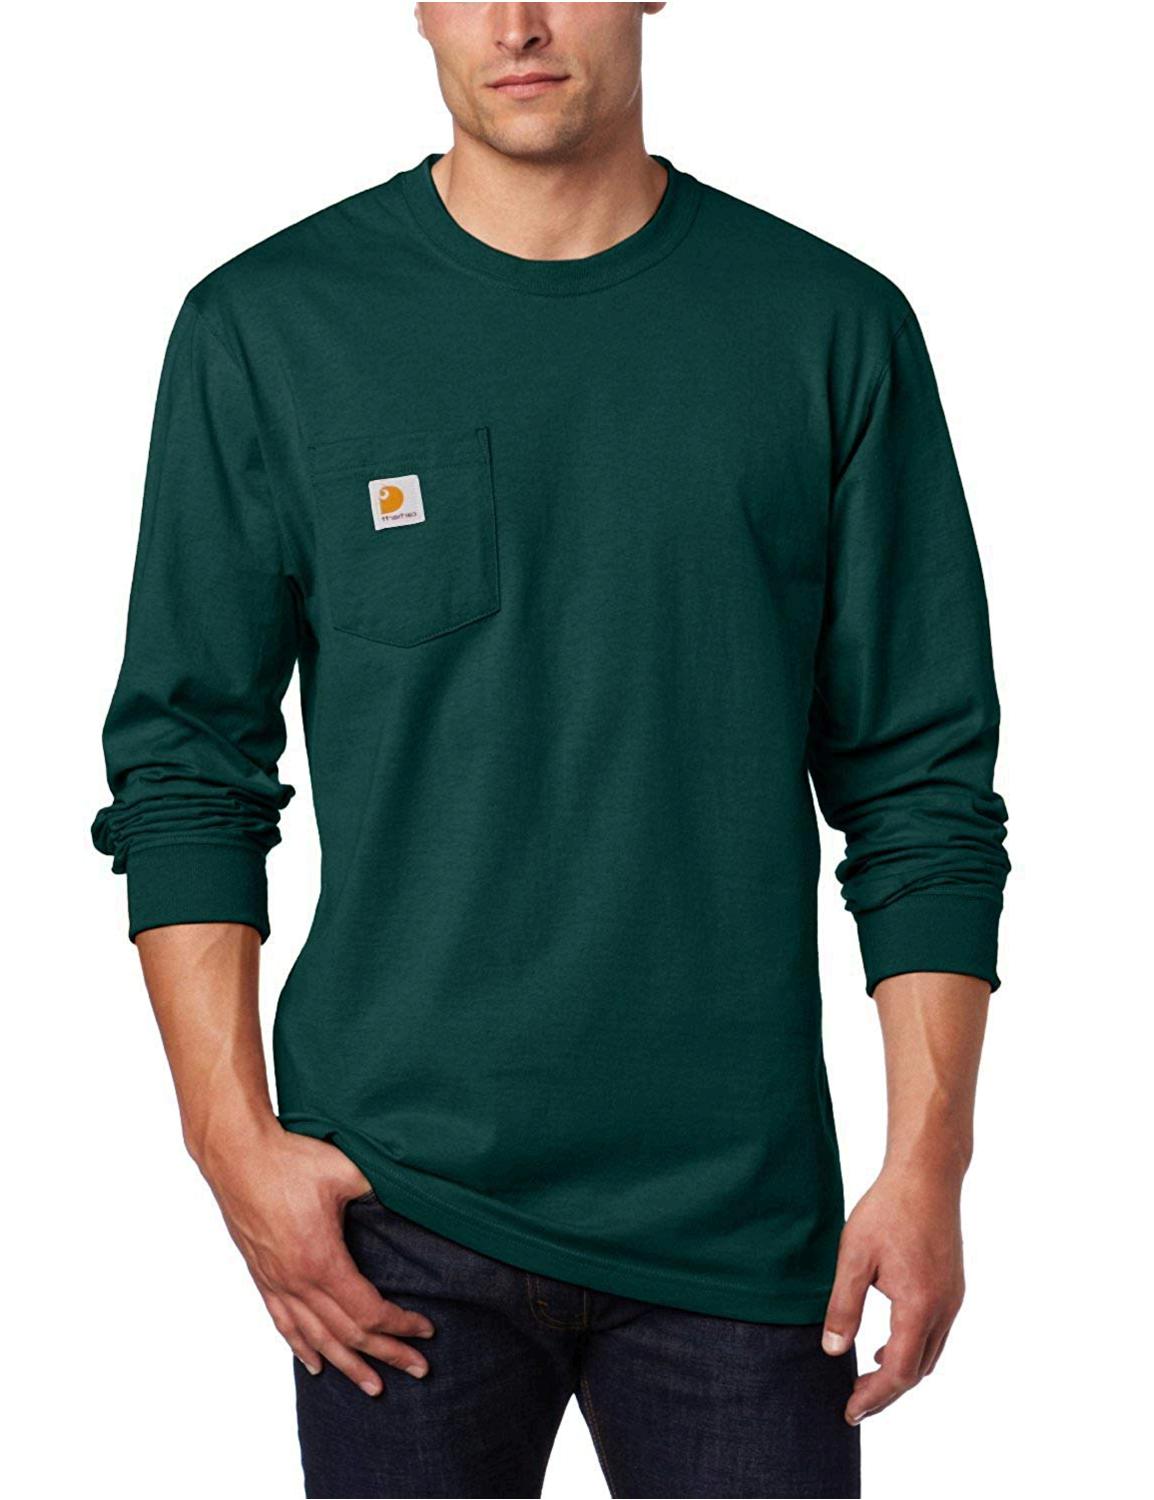 Carhartt Men's Workwear Pocket Long Sleeve T-Shirt, Hunter Green, Size ...